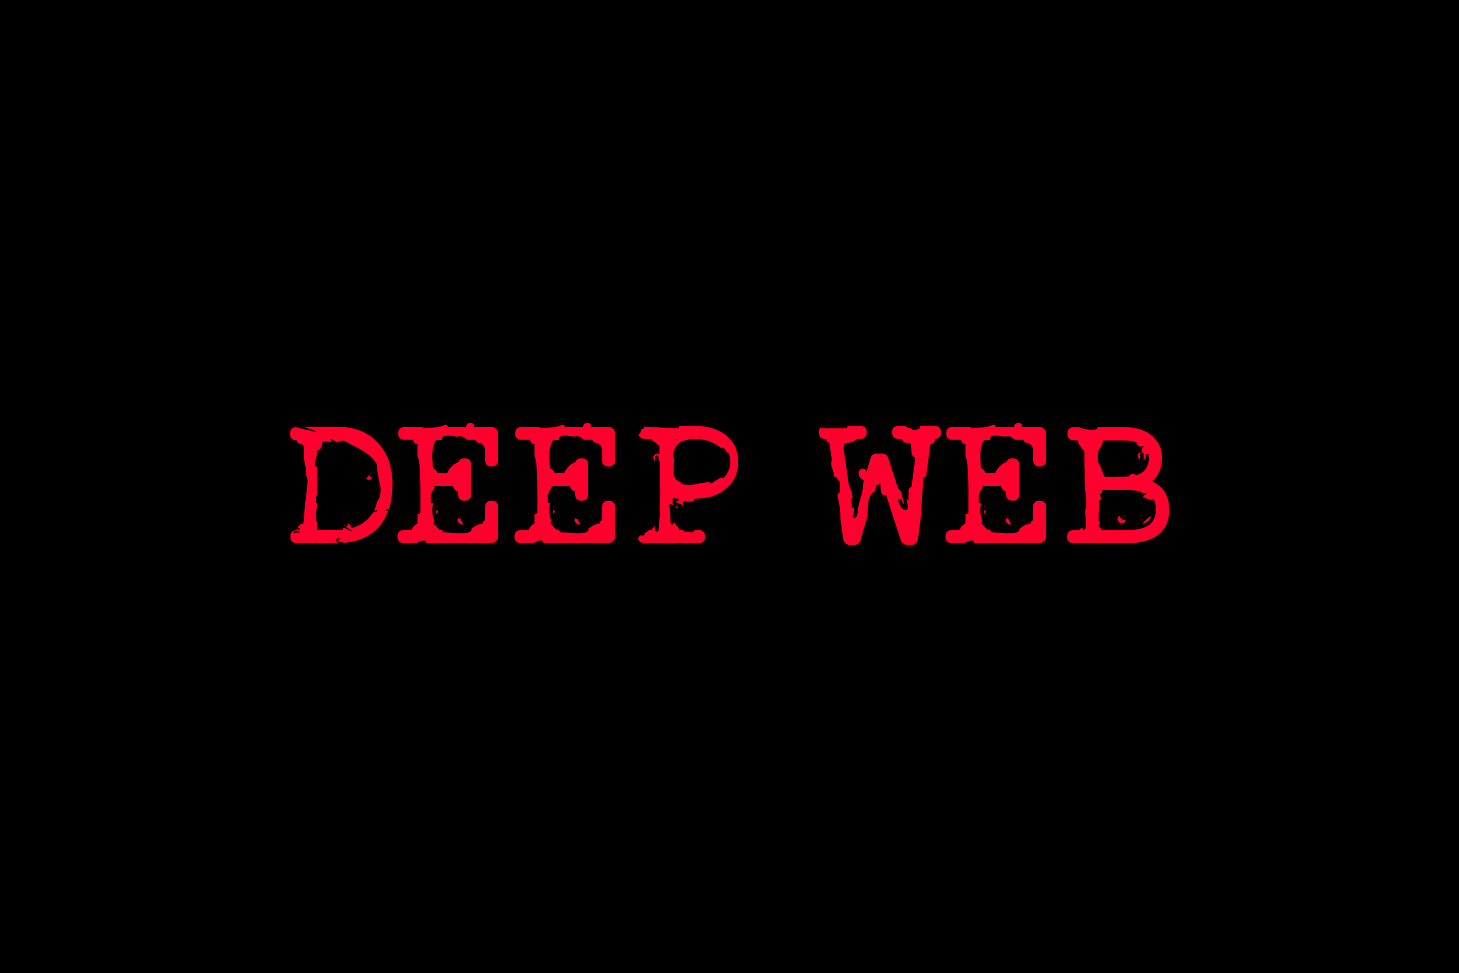 Deep web drug url